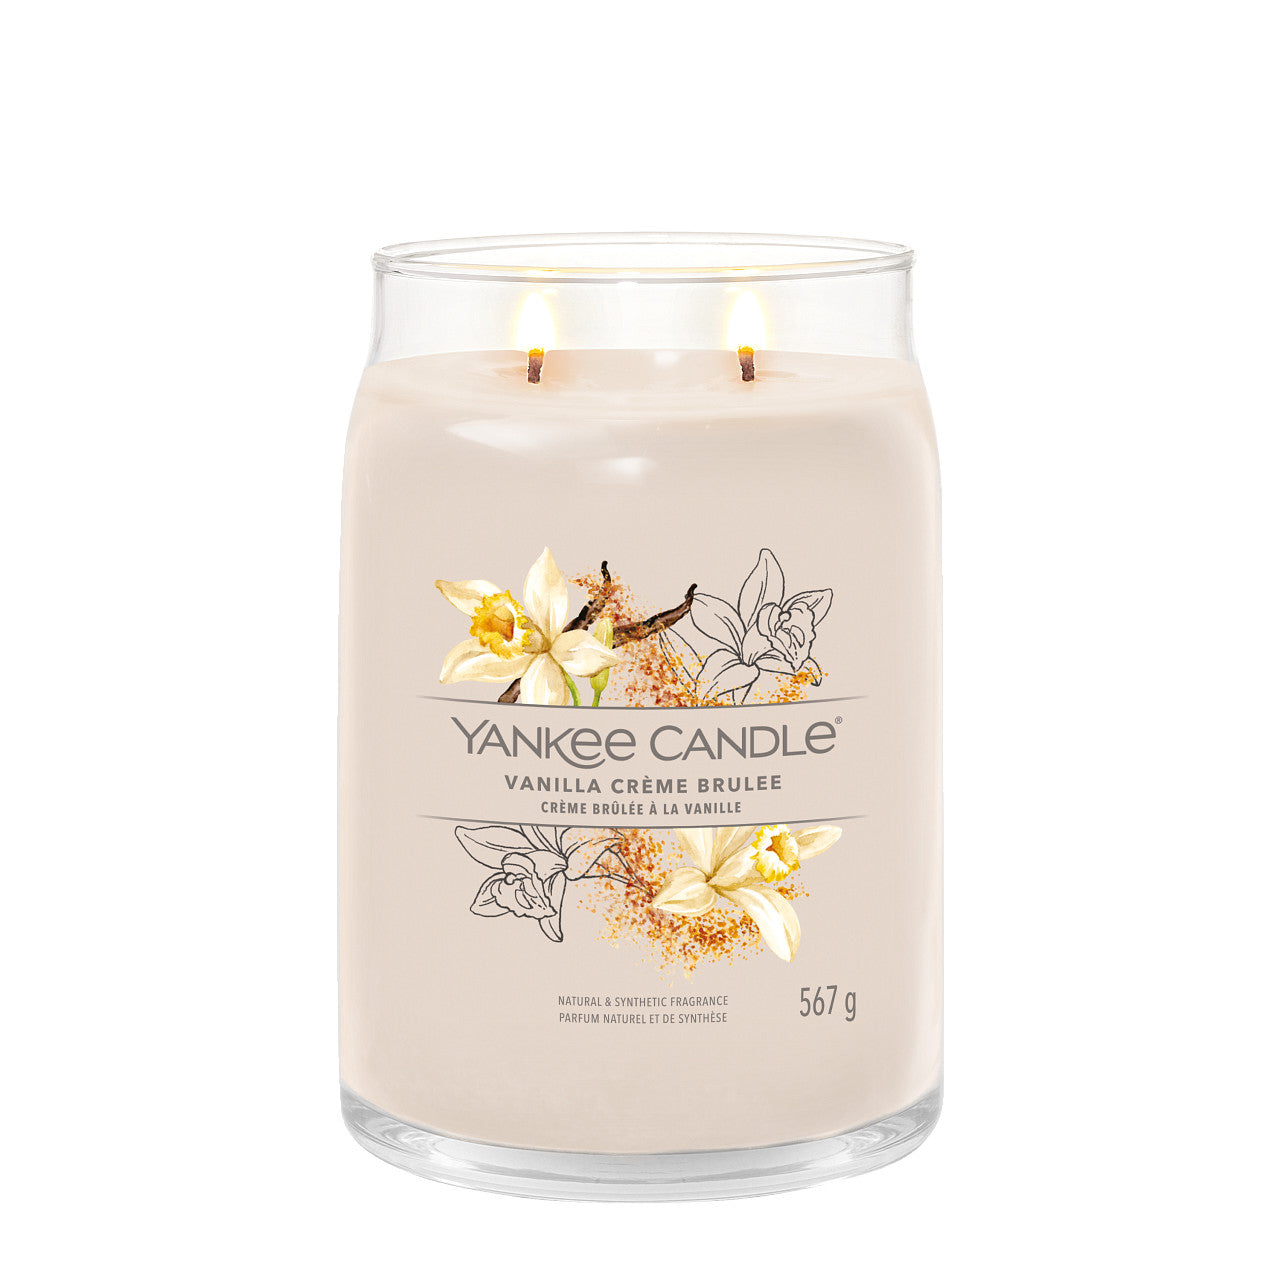 Vanilla Crème Brulee - Signature Large Jar Scented Candle